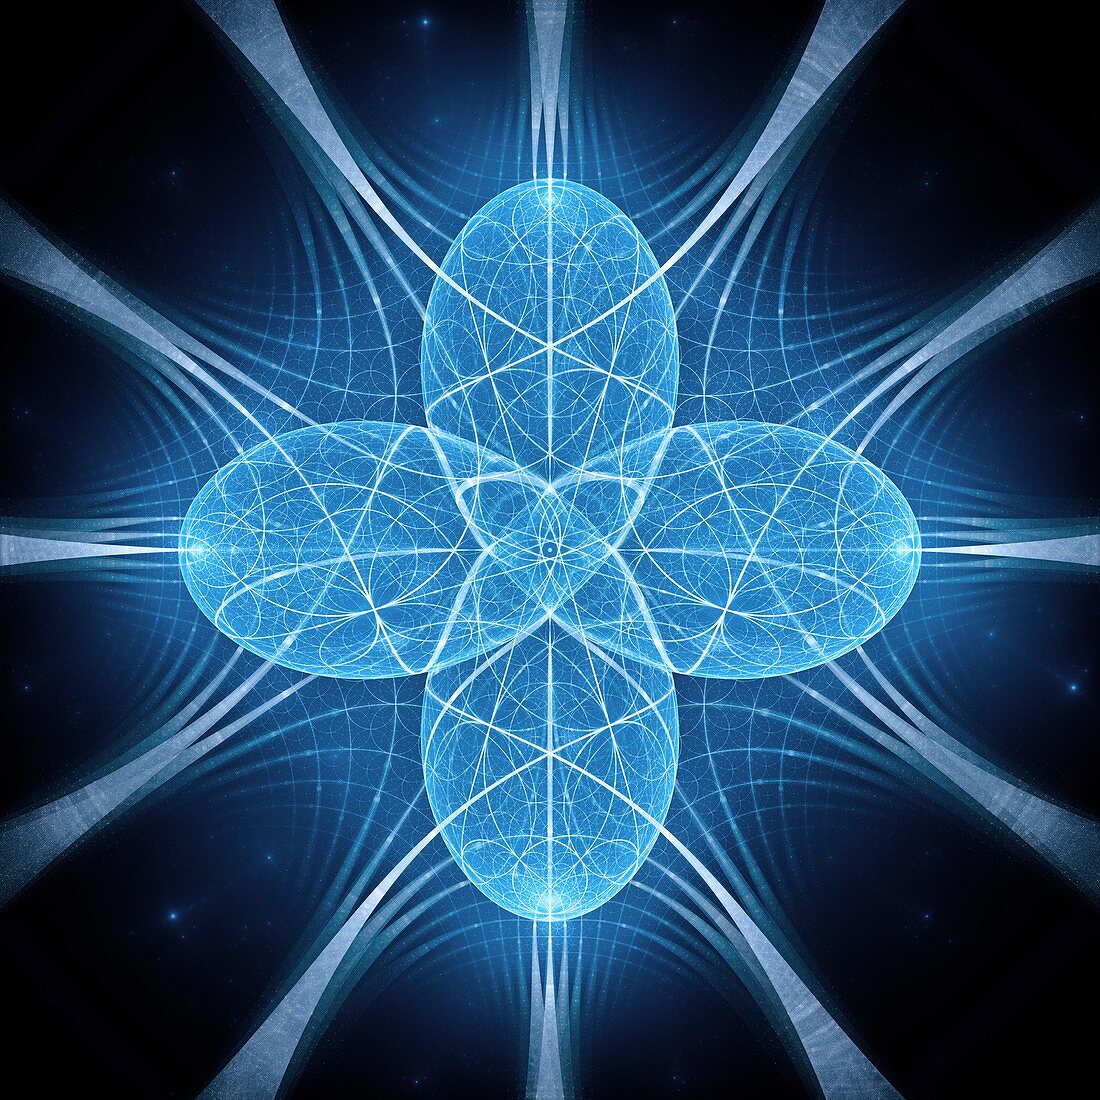 Quantum harmony, abstract fractal illustration